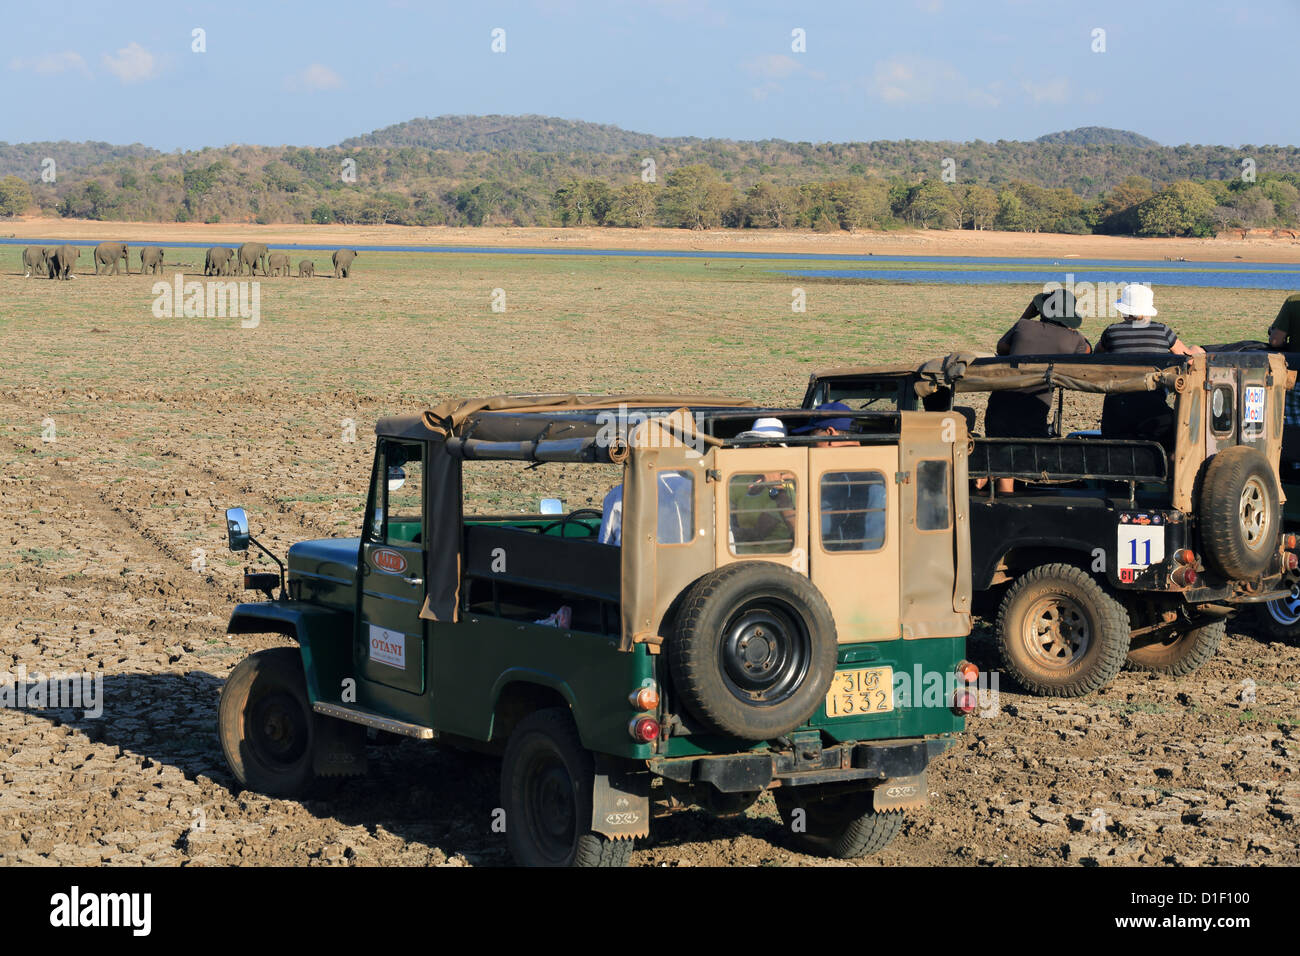 Jeeps on safari in a dry Minneriya National Park, Sri Lanka. Stock Photo